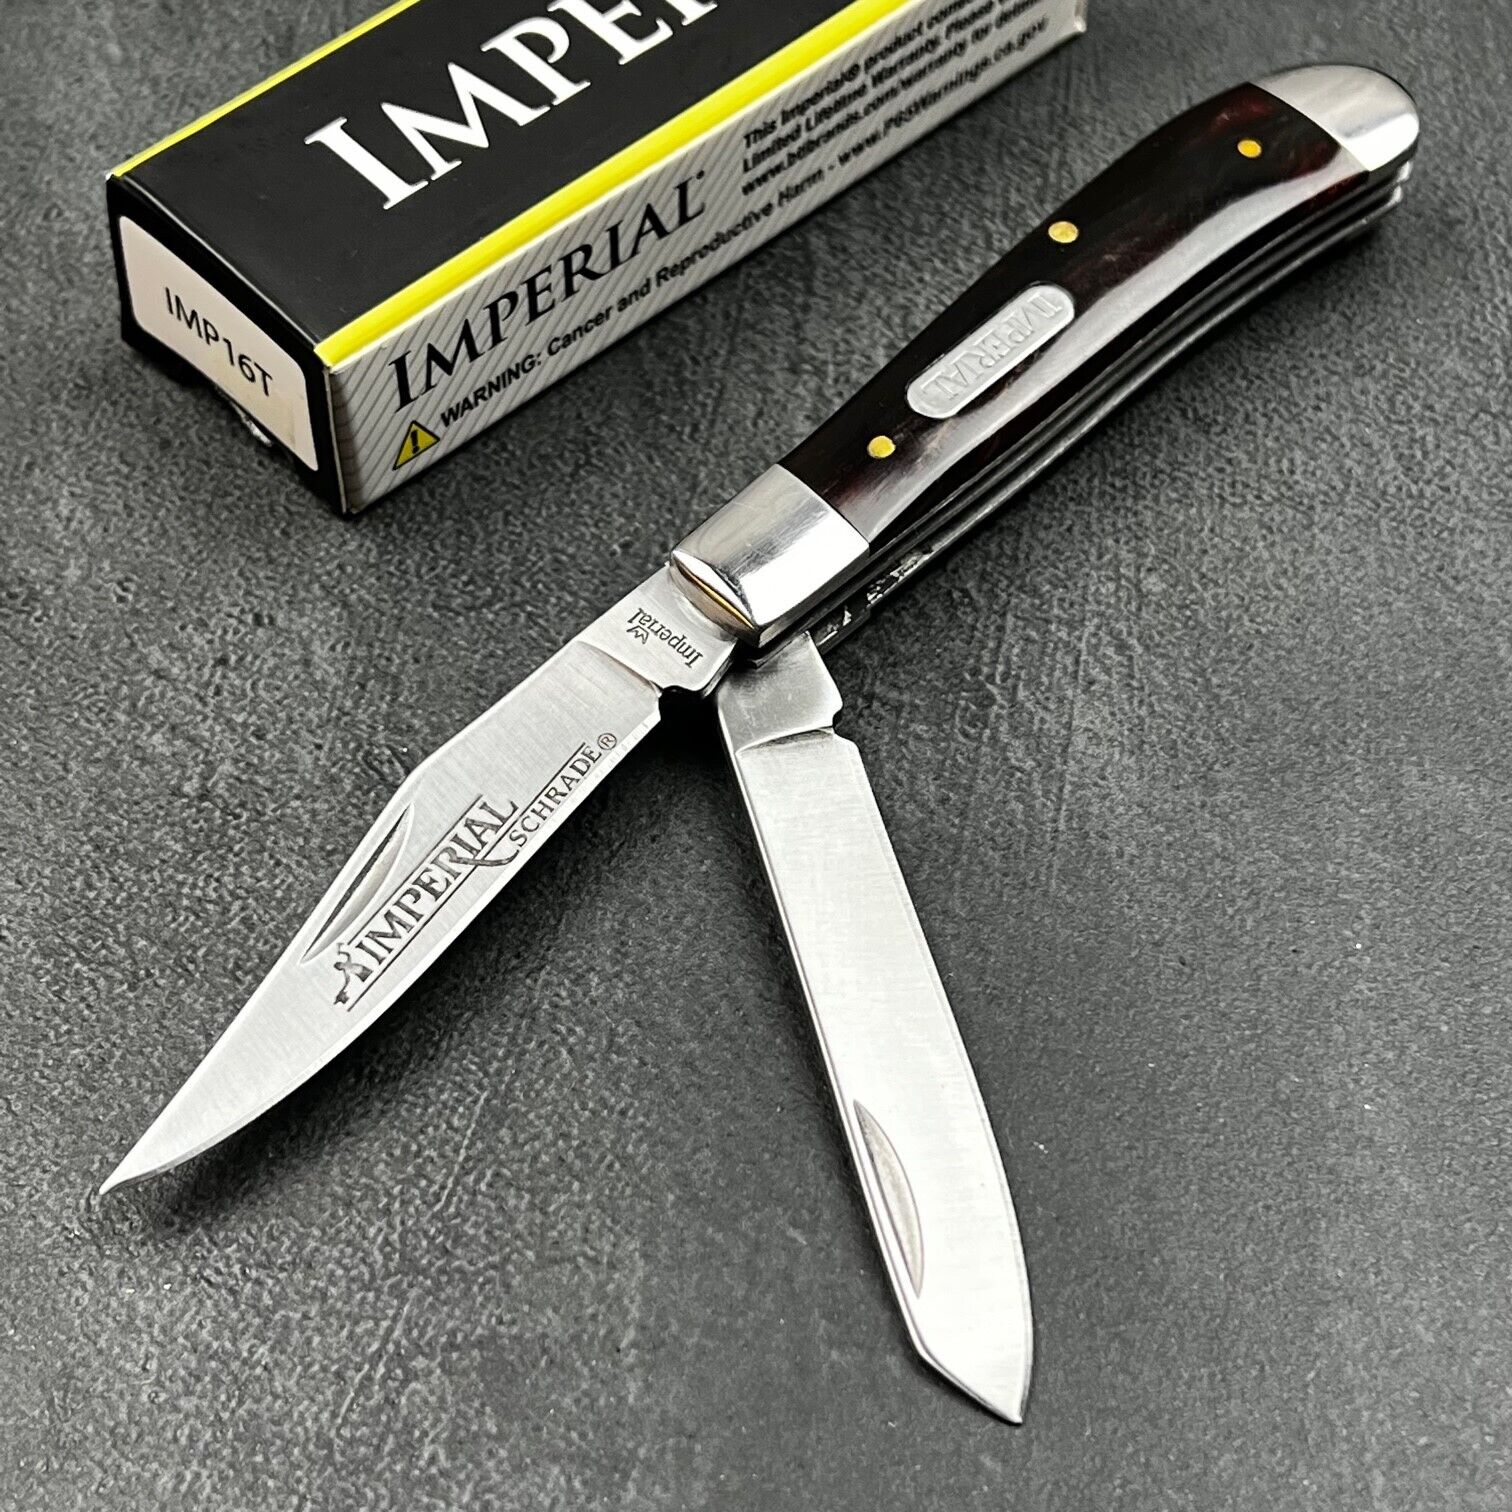 Schrade Imperial Amber Celluloid Medium 2 Blade Trapper EDC Folding Pocket Knife